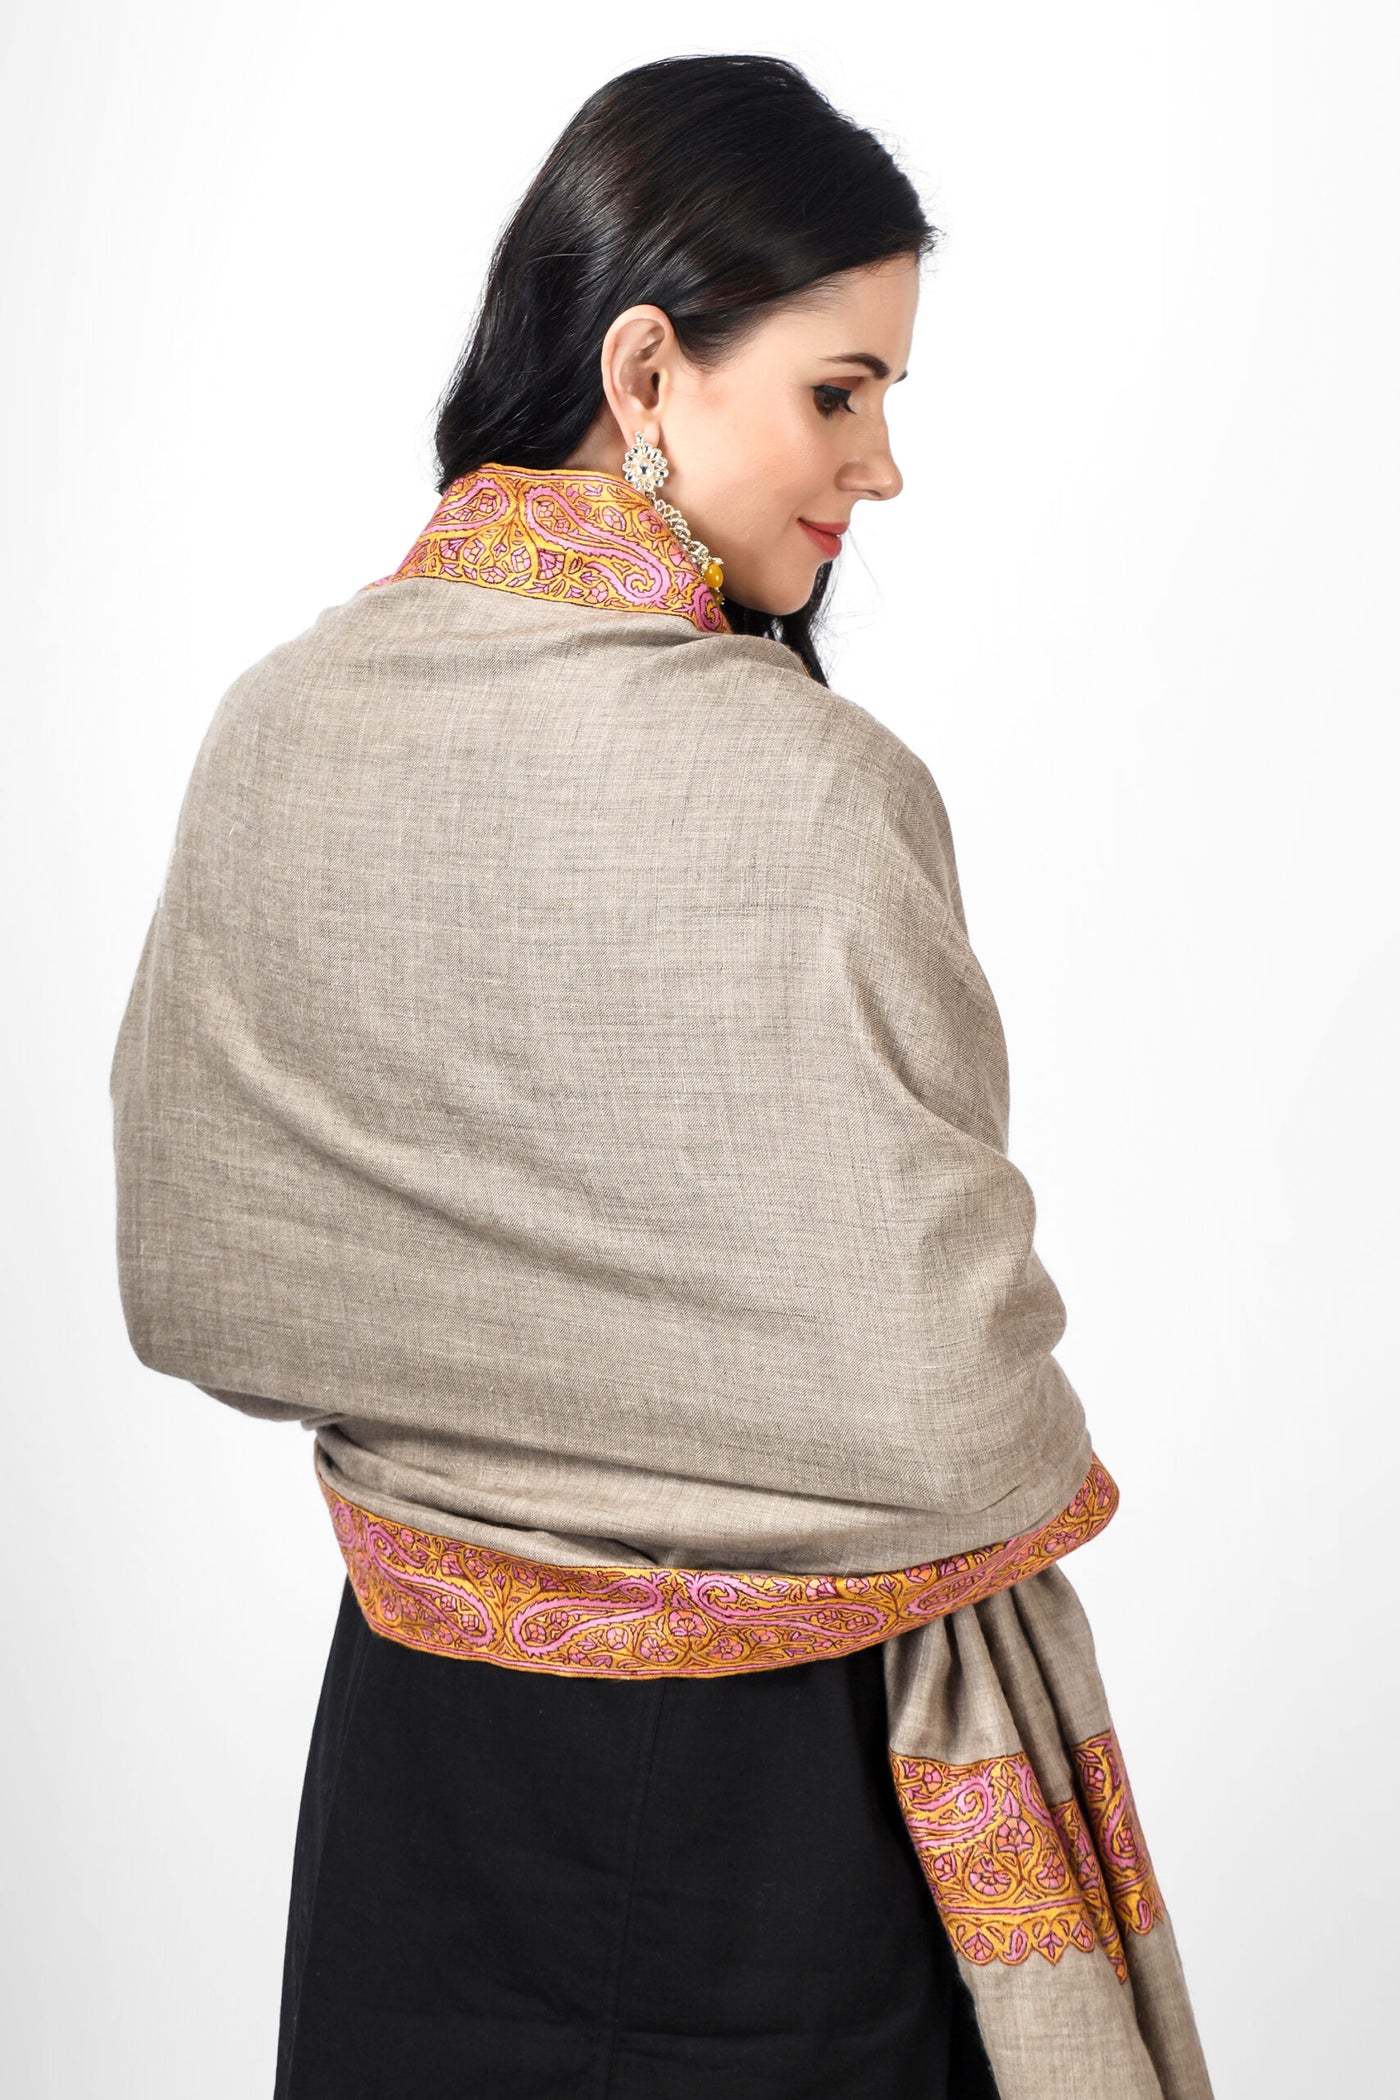 Natural Aksi Pashmina kalaan border sozni shawl